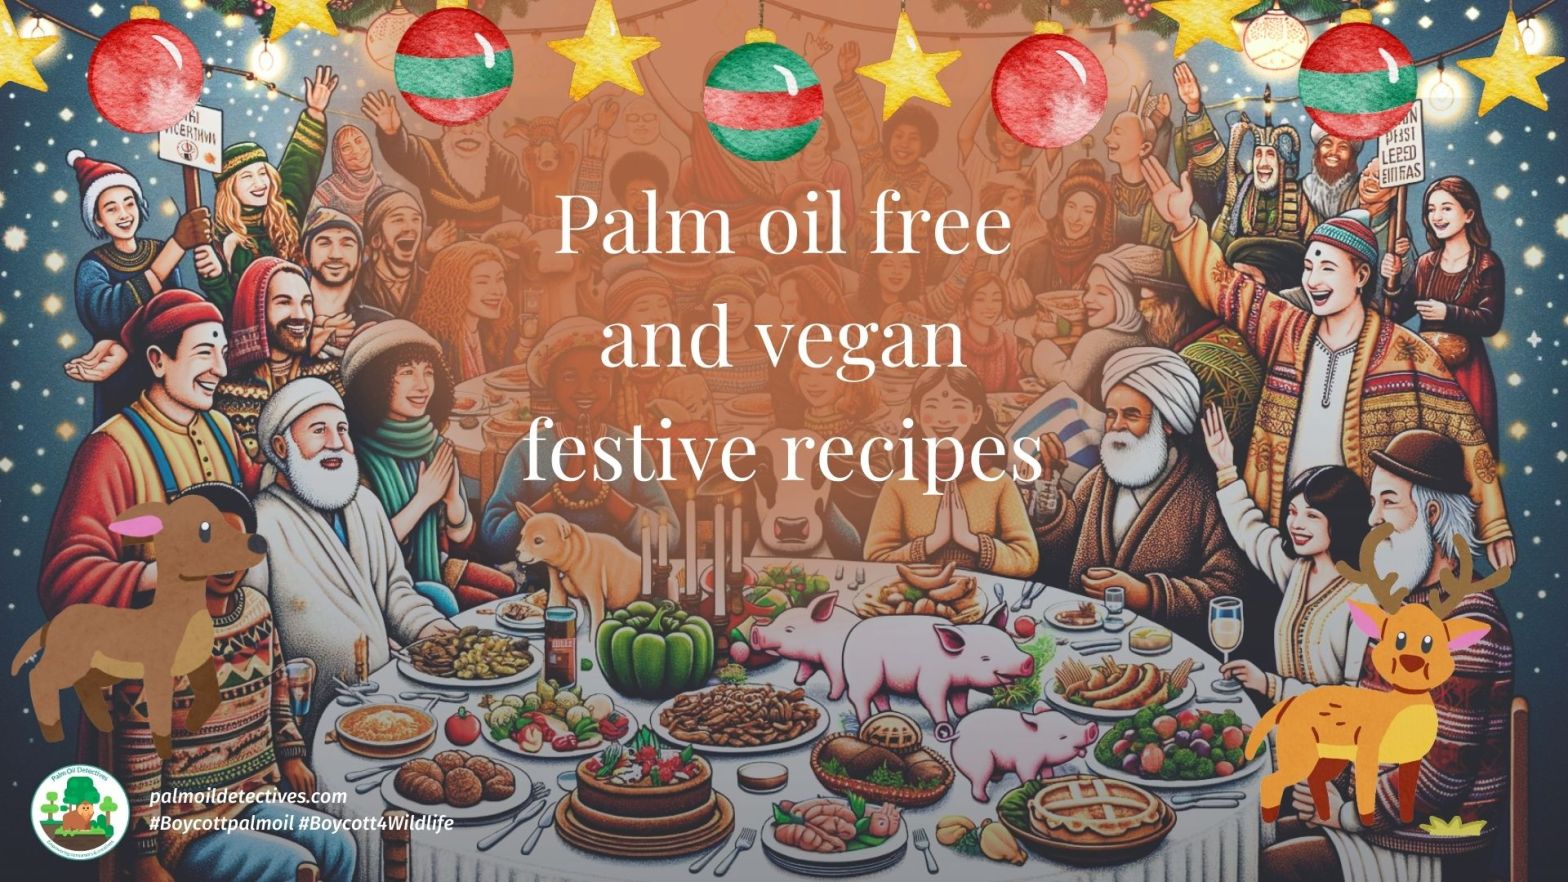 Palm oil free and vegan festive recipes